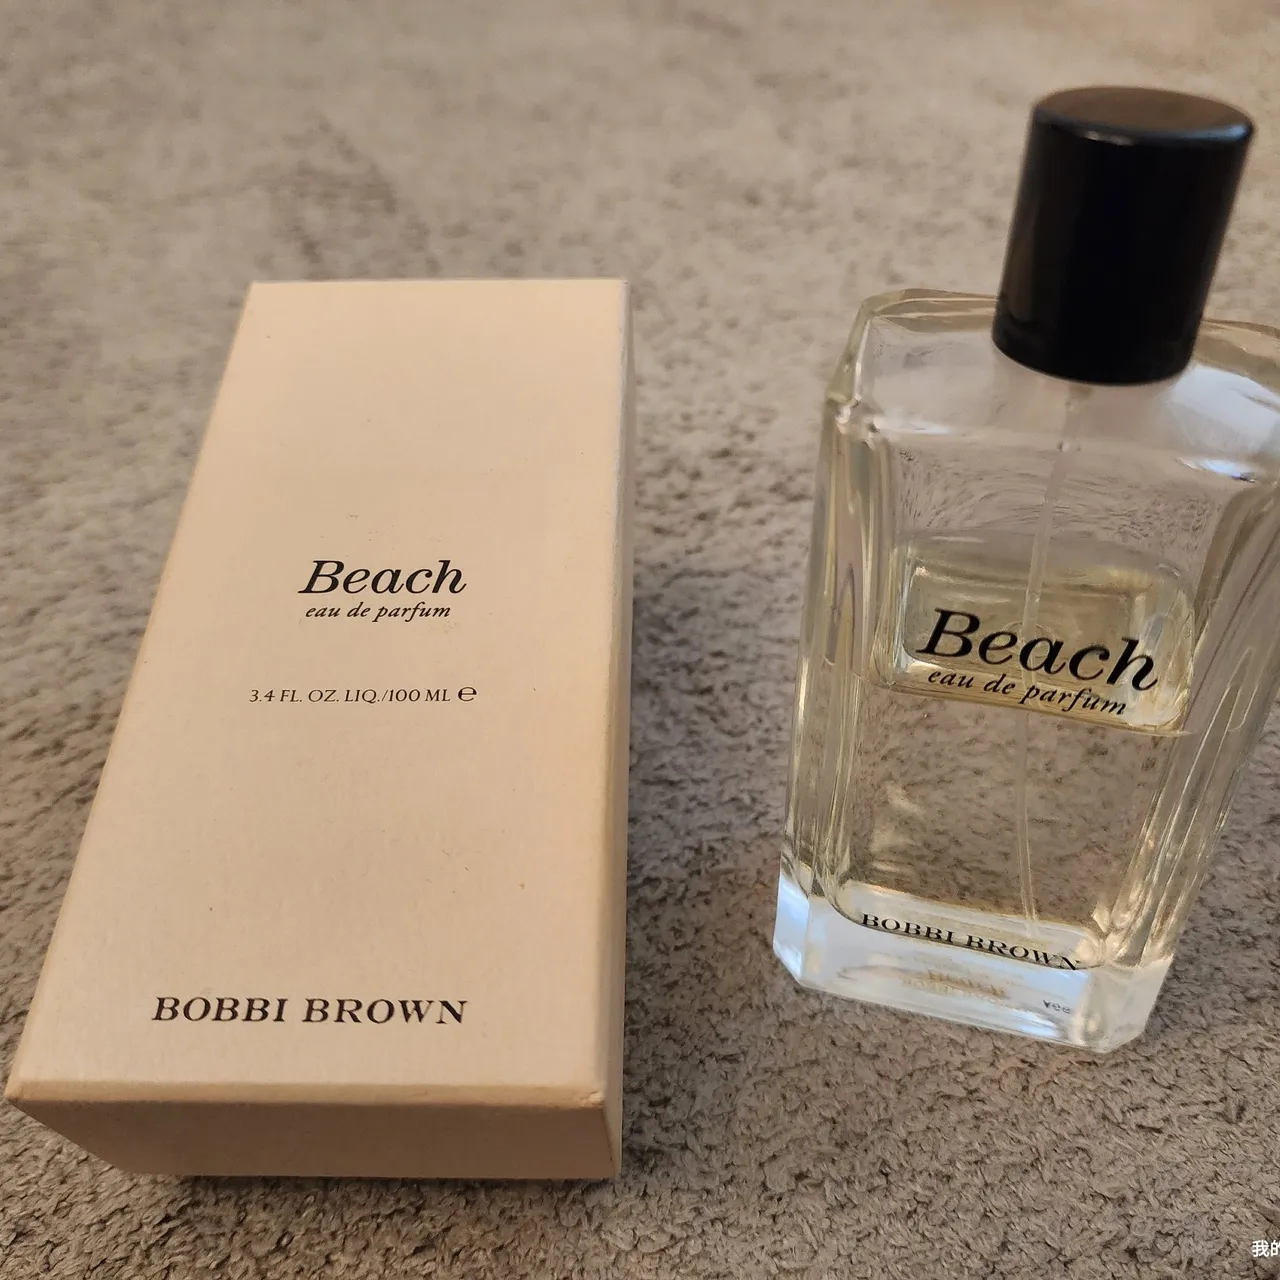 Bobbi Brown Beach perfume photo 1